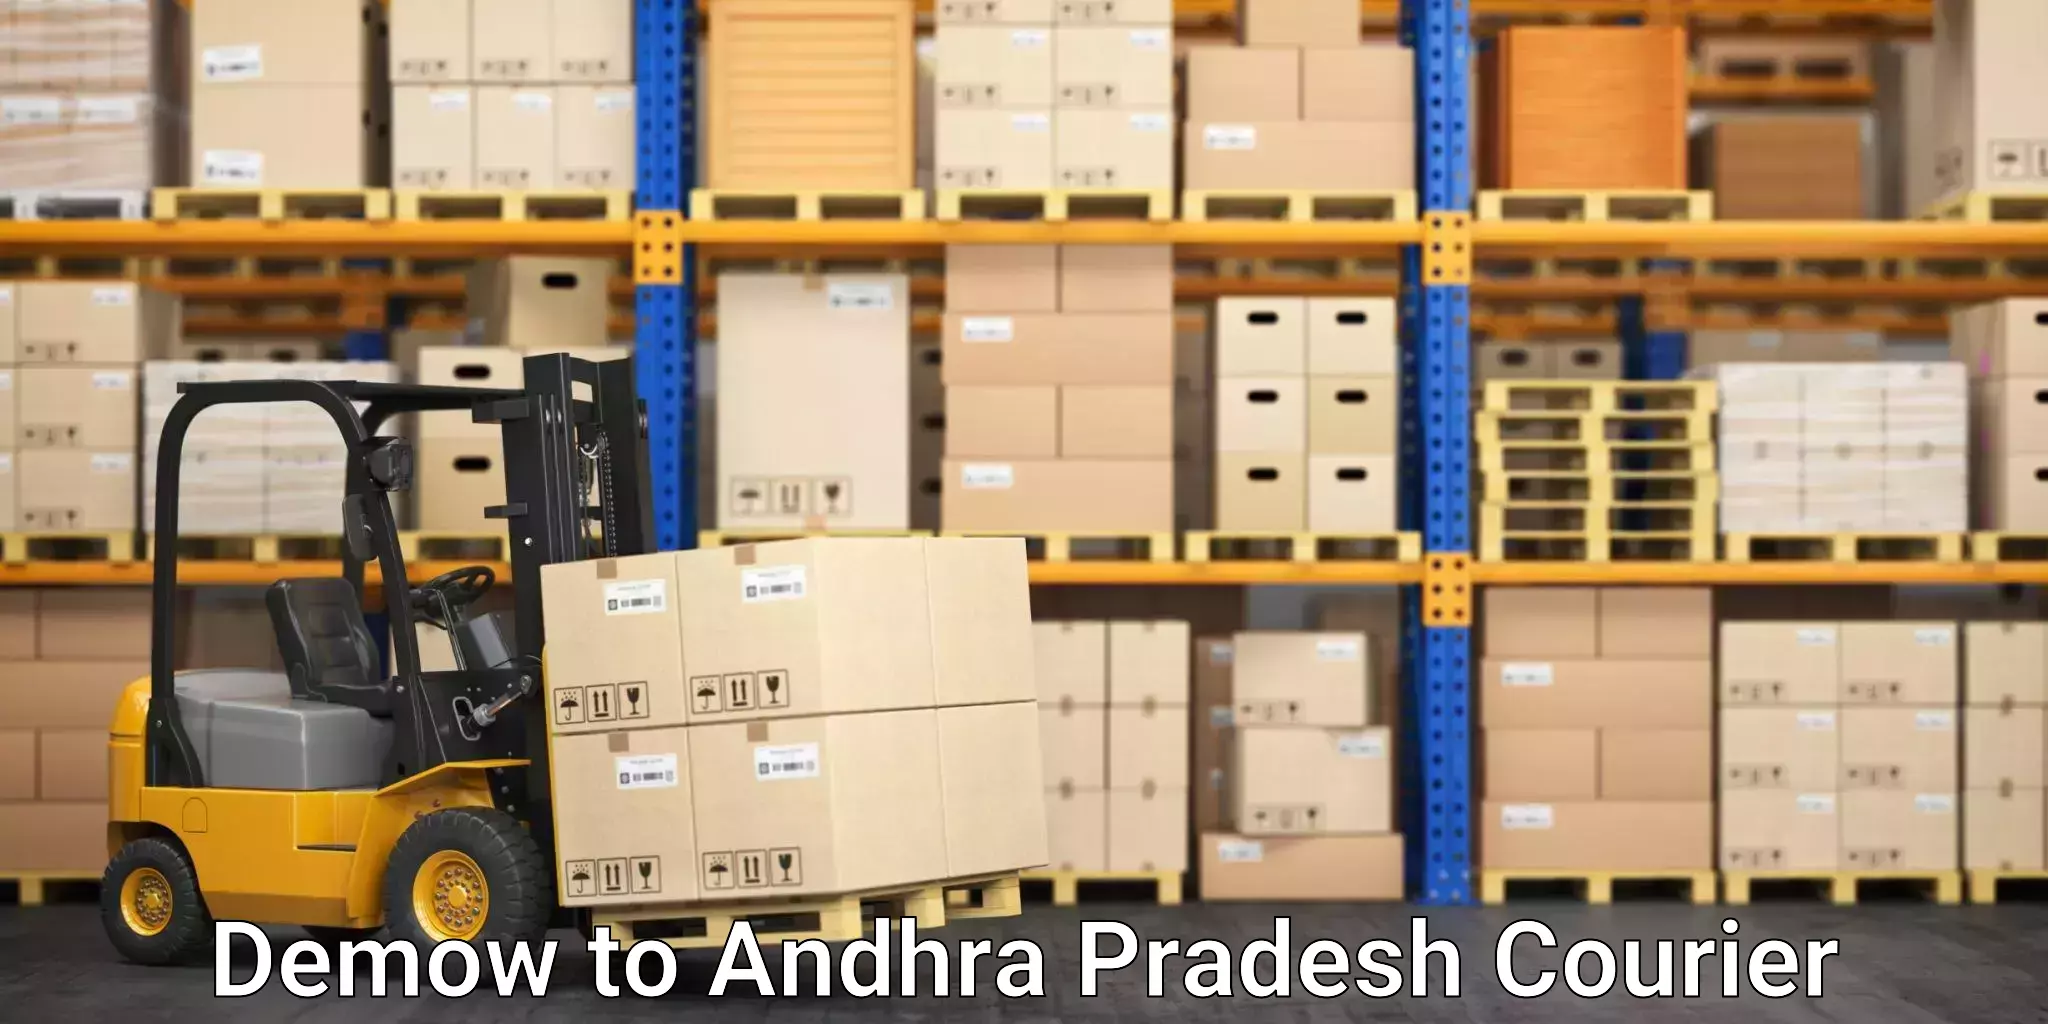 Expedited shipping methods Demow to Andhra Pradesh